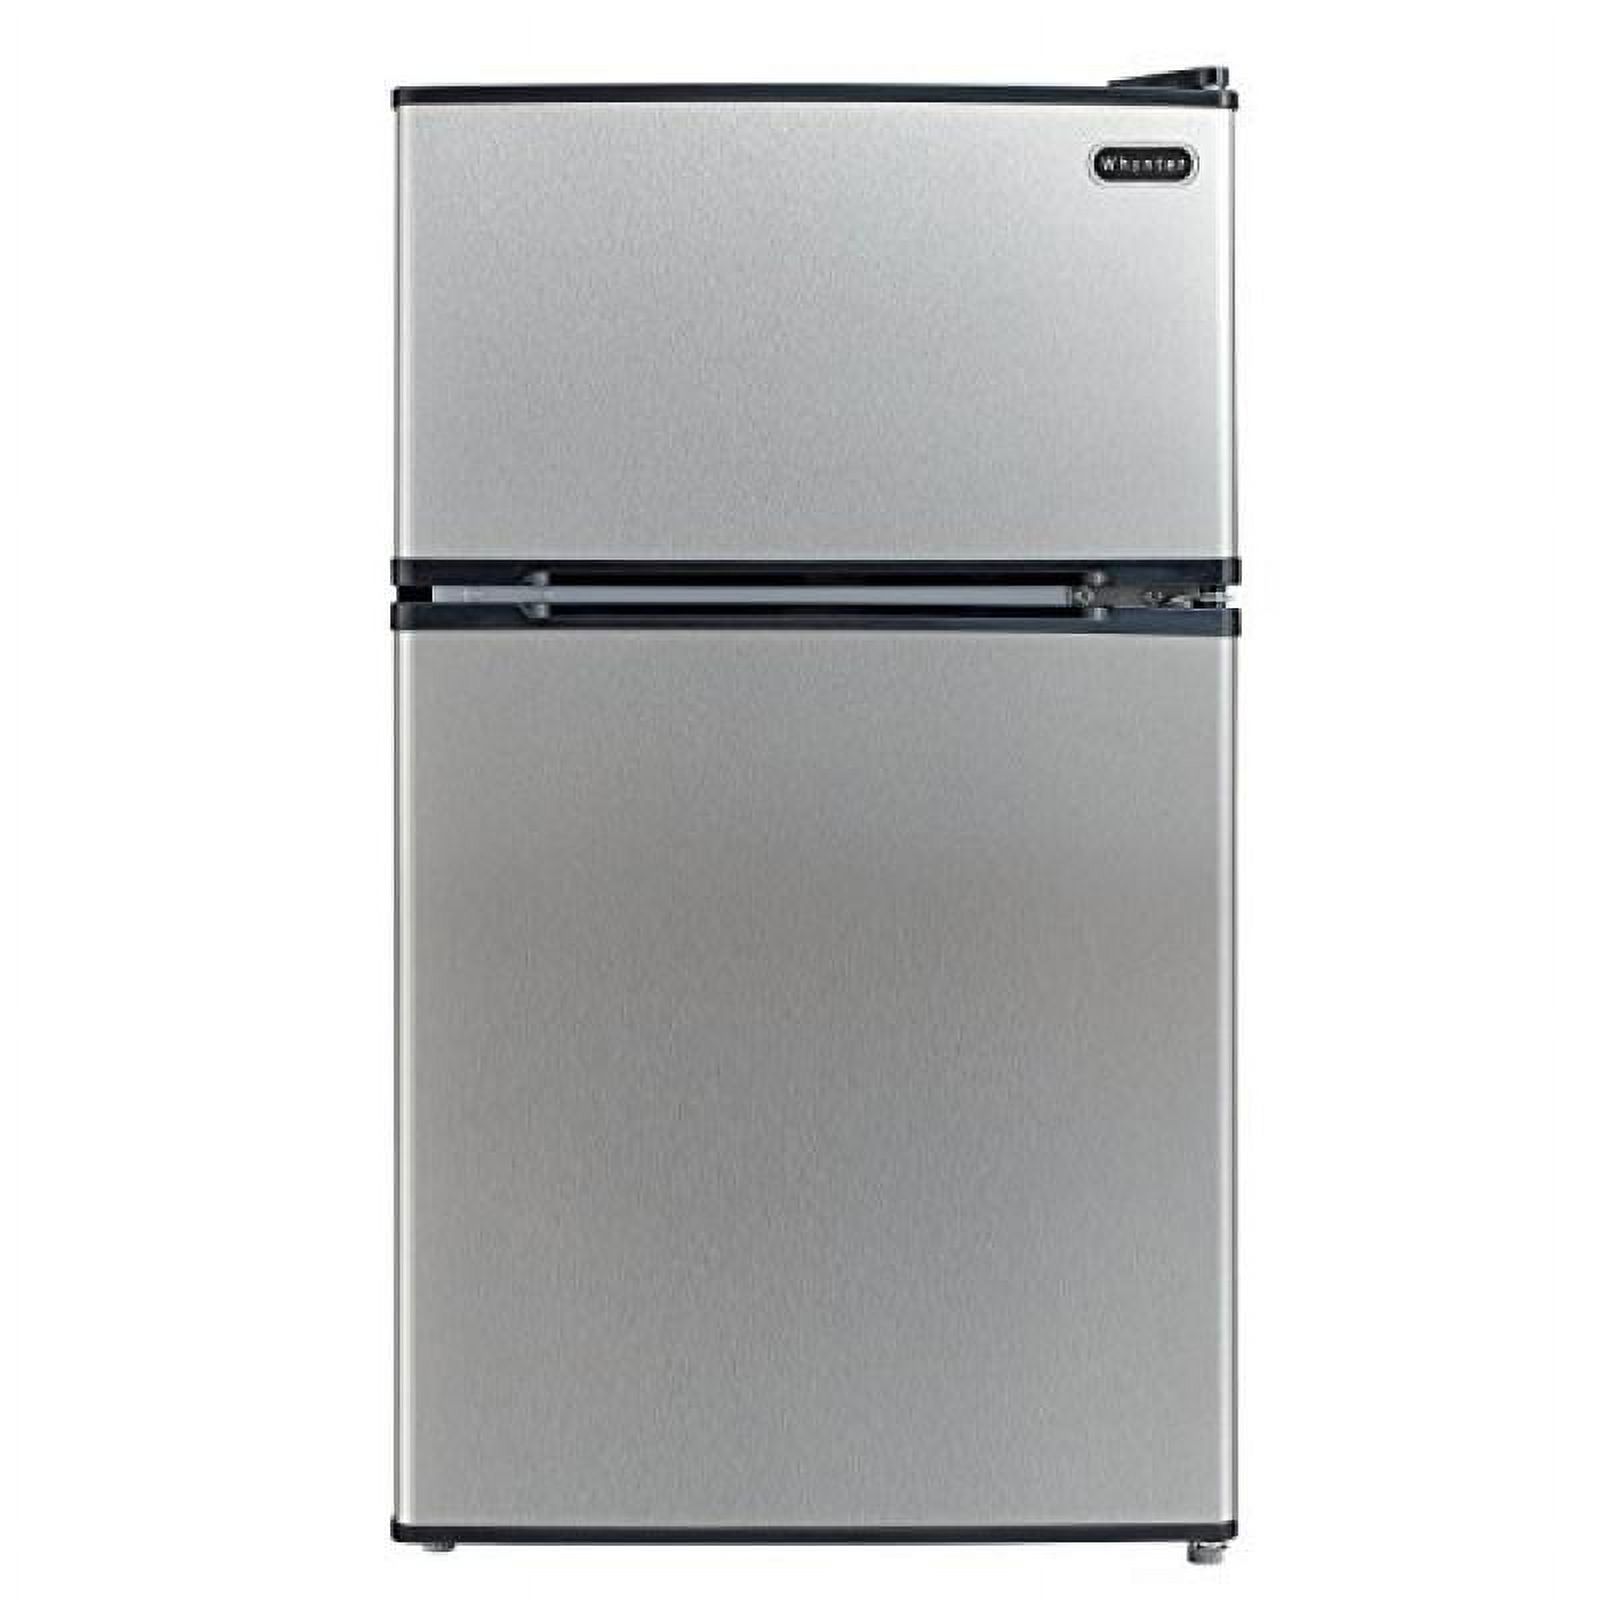 Whynter MRF-340DS Refrigerator Freezer Freestanding Width 19 in, Depth 23 in, Height 33 in Top-Freezer, Stainless Steel - image 1 of 6